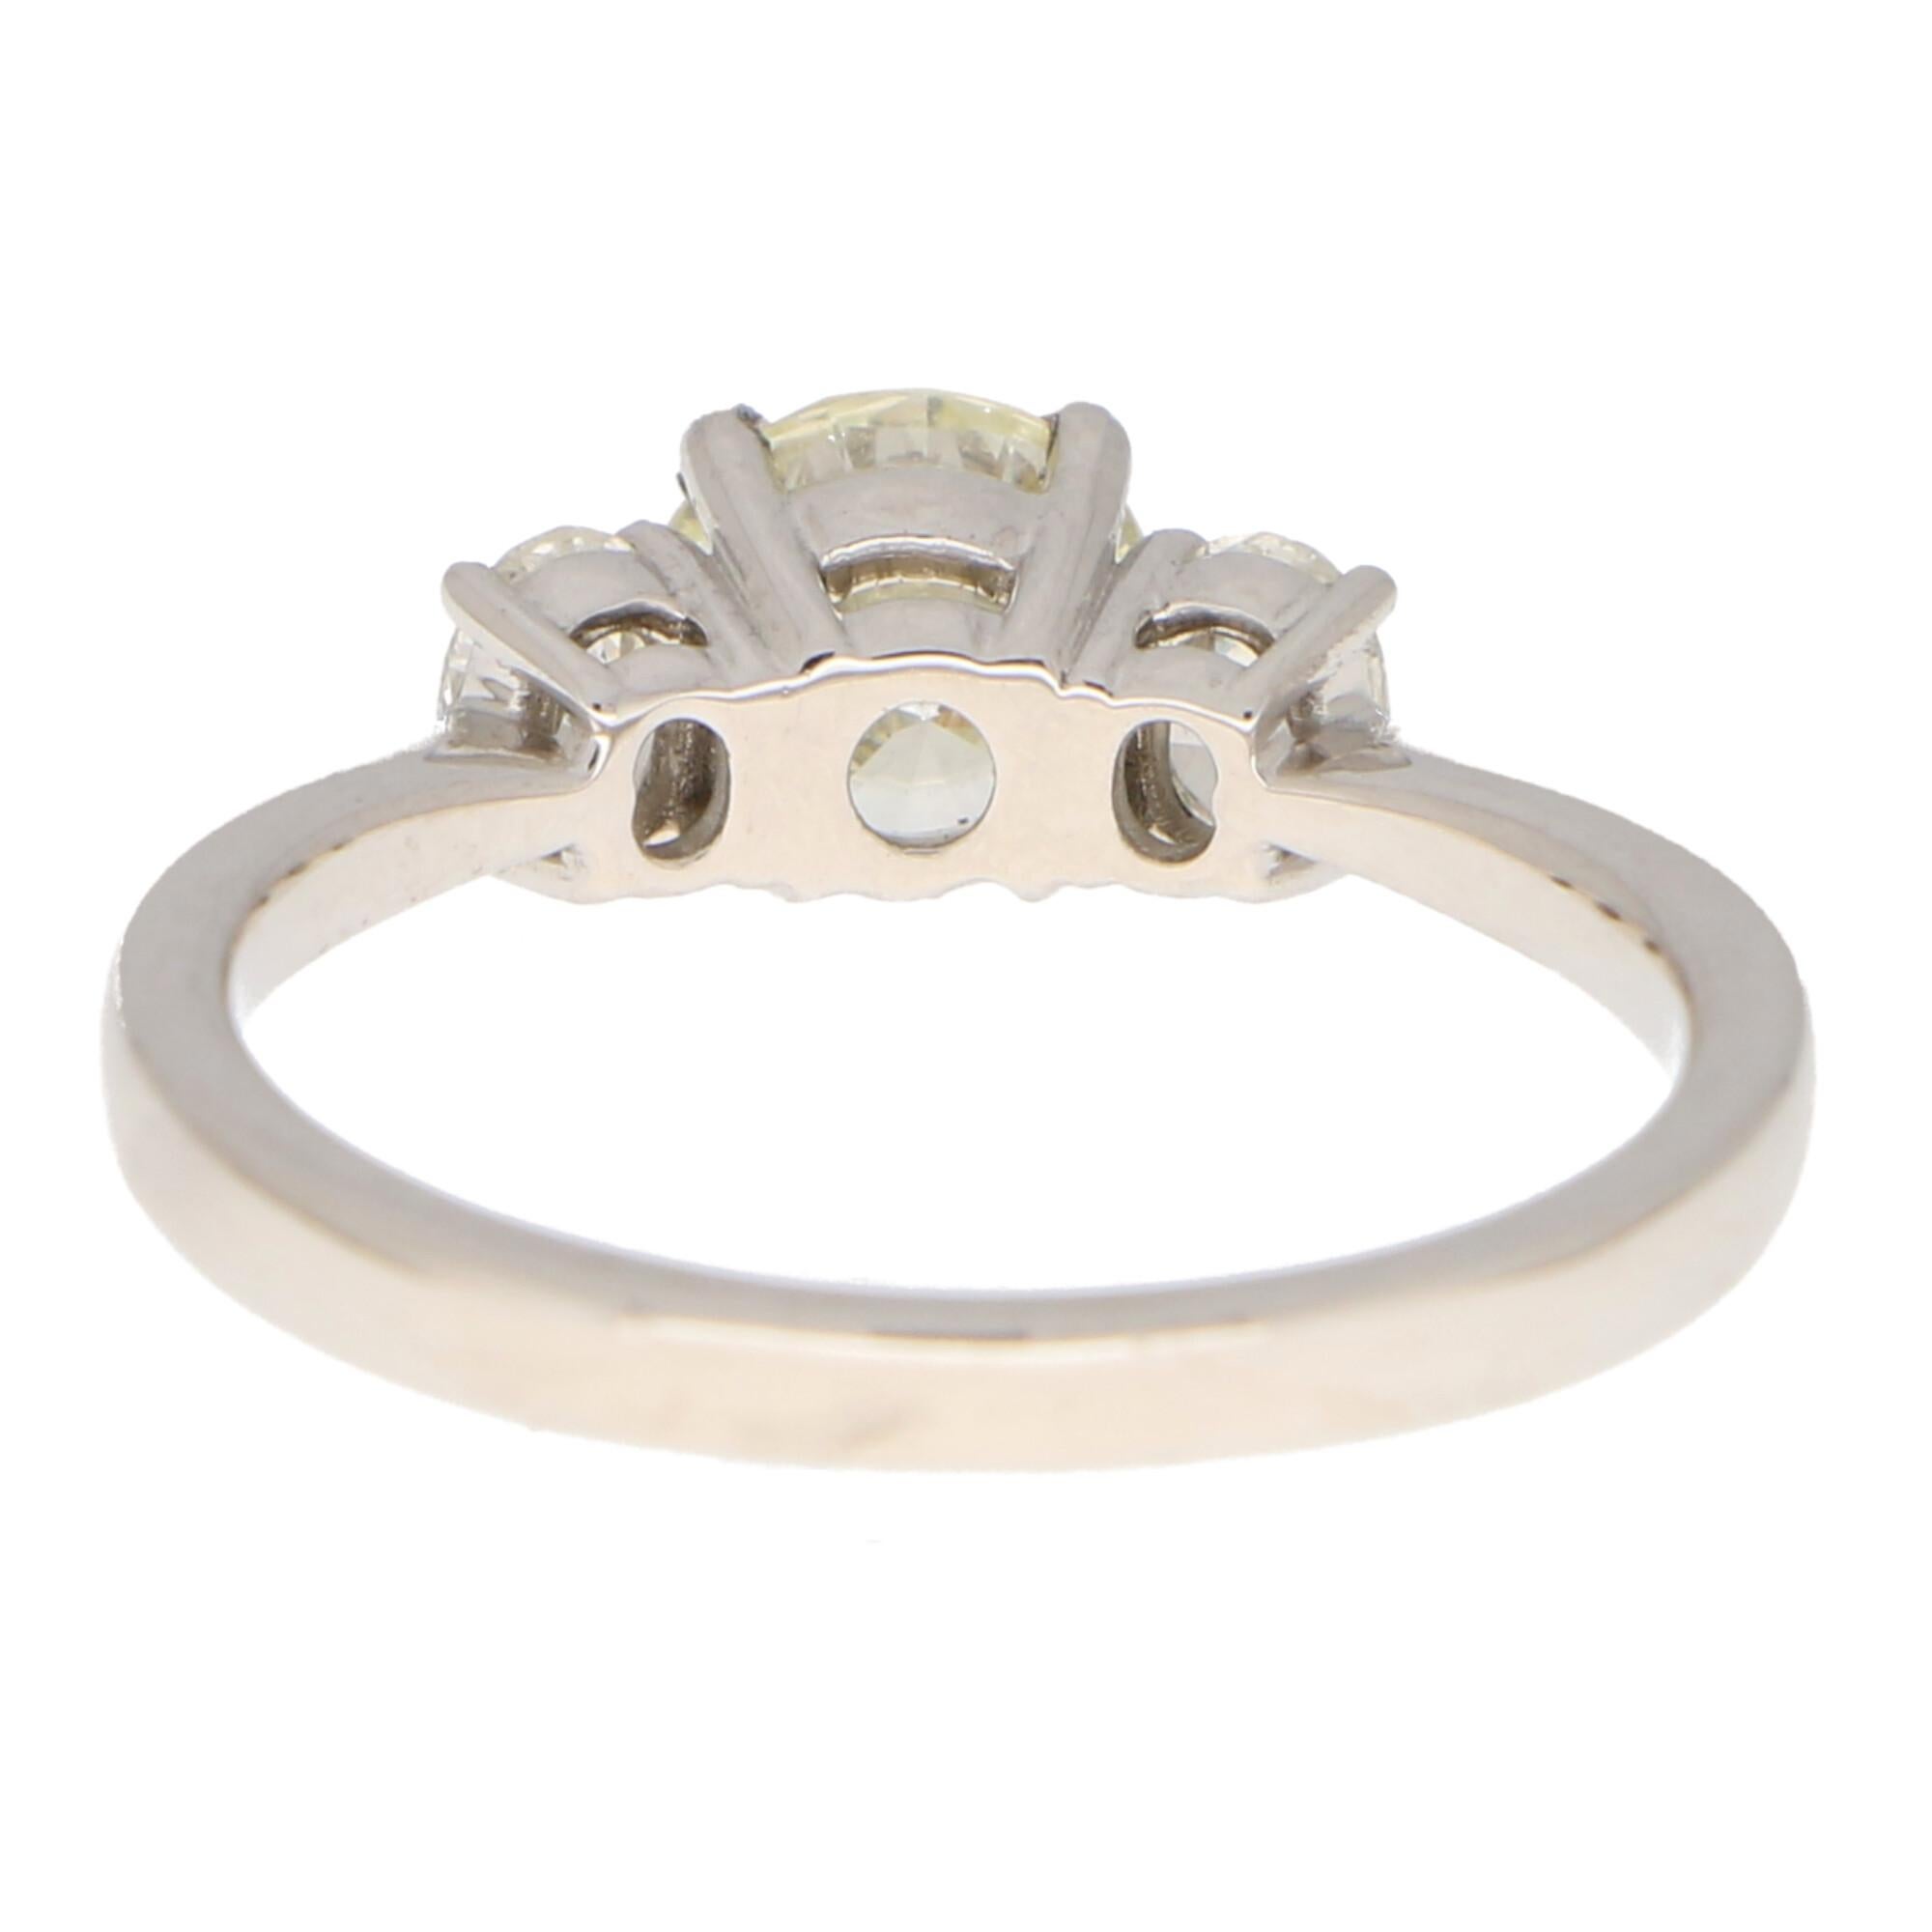 Round Cut Pale Yellow Diamond Three Stone Engagement Ring Set in 18k White Gold